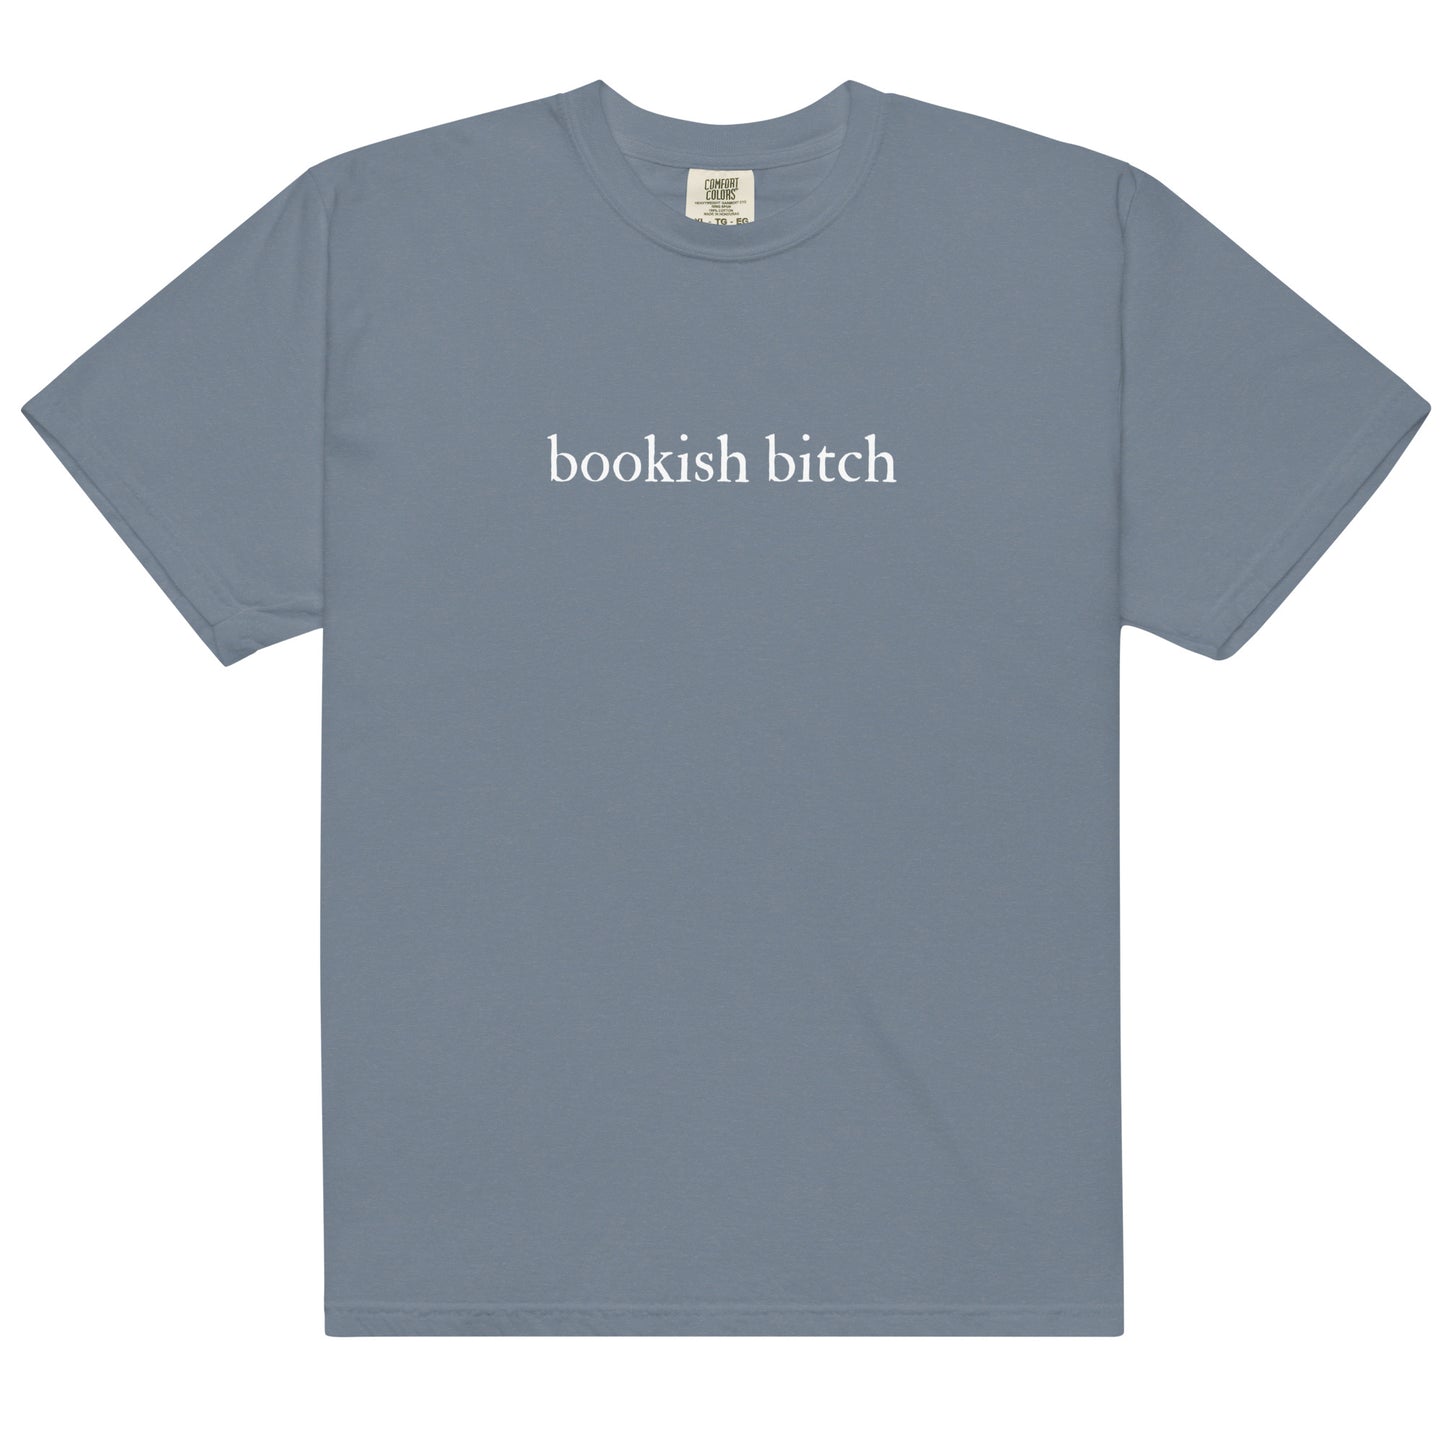 bookish bitch t-shirt